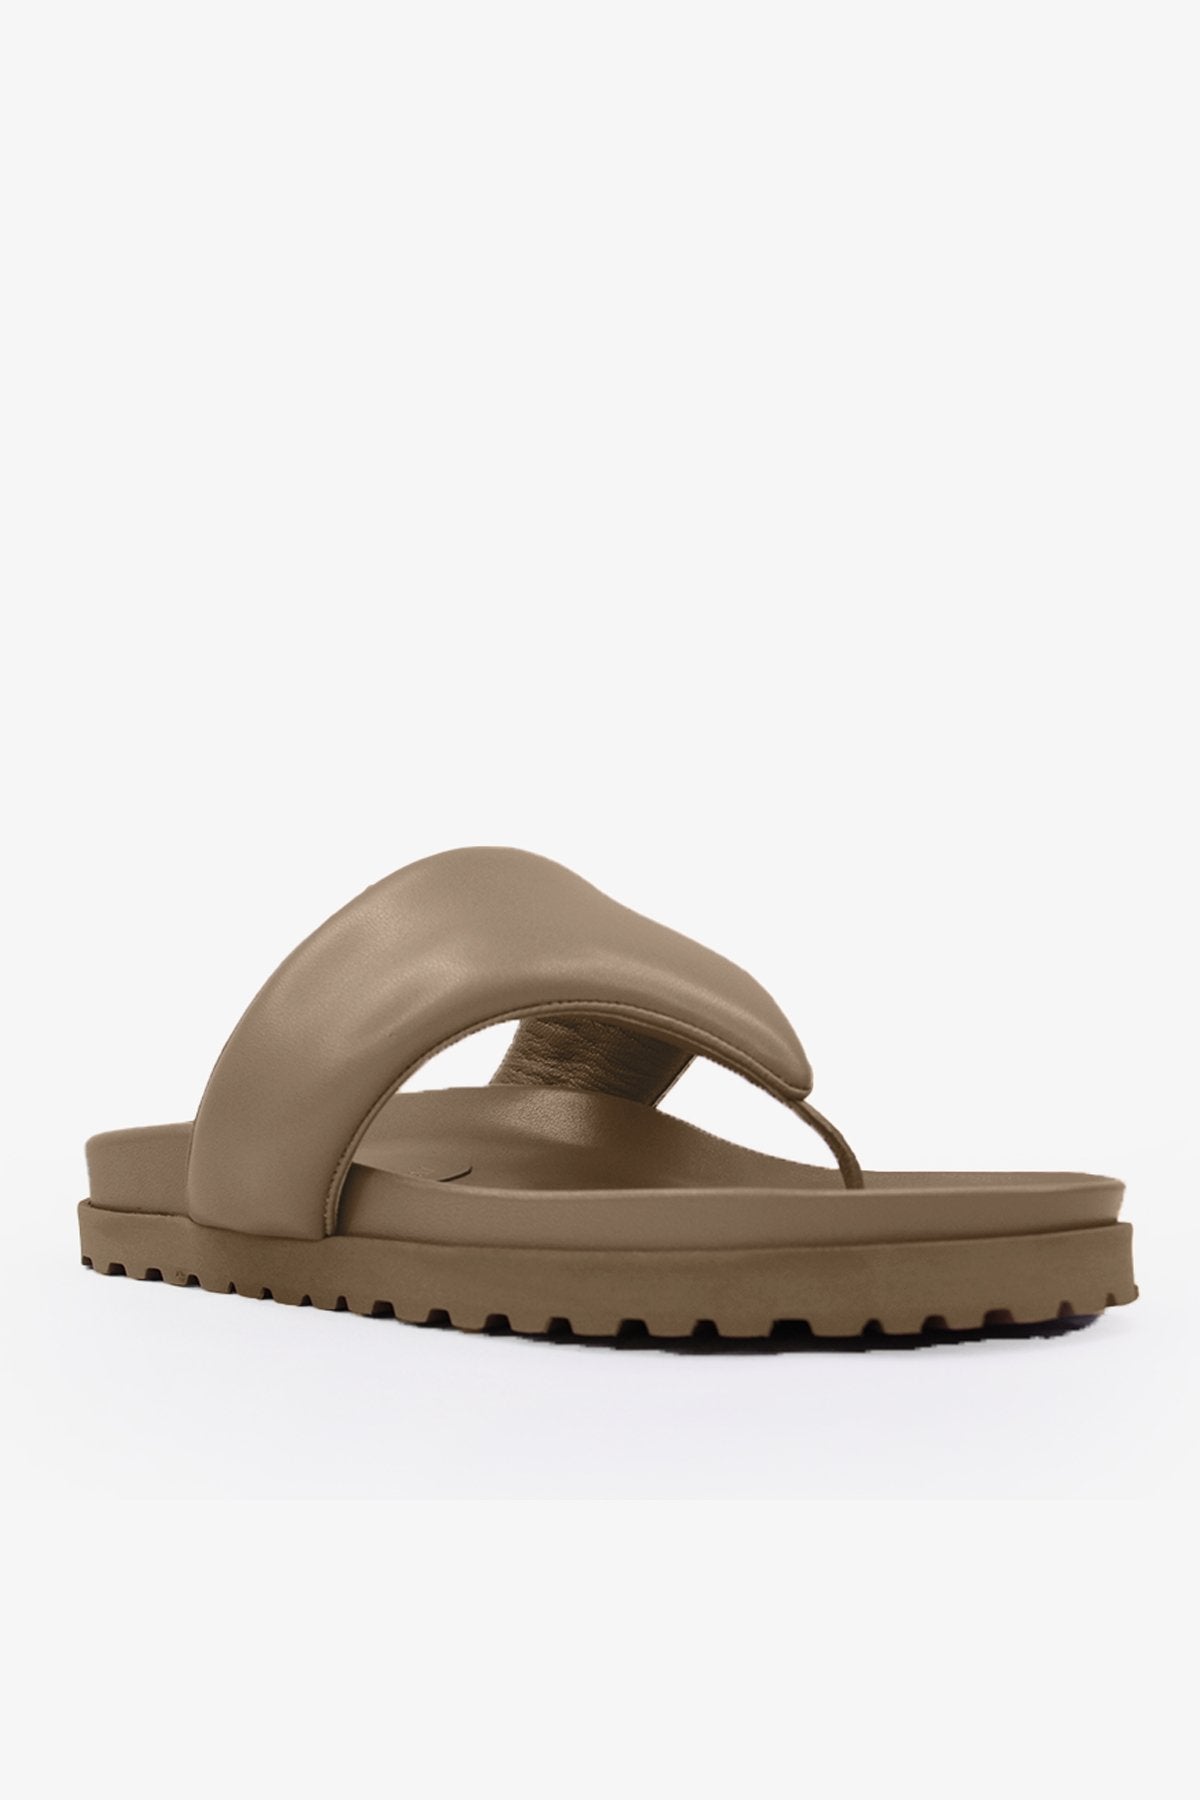 Perni Padded Flip Flop Flat Sandal in Taupe - shop-olivia.com